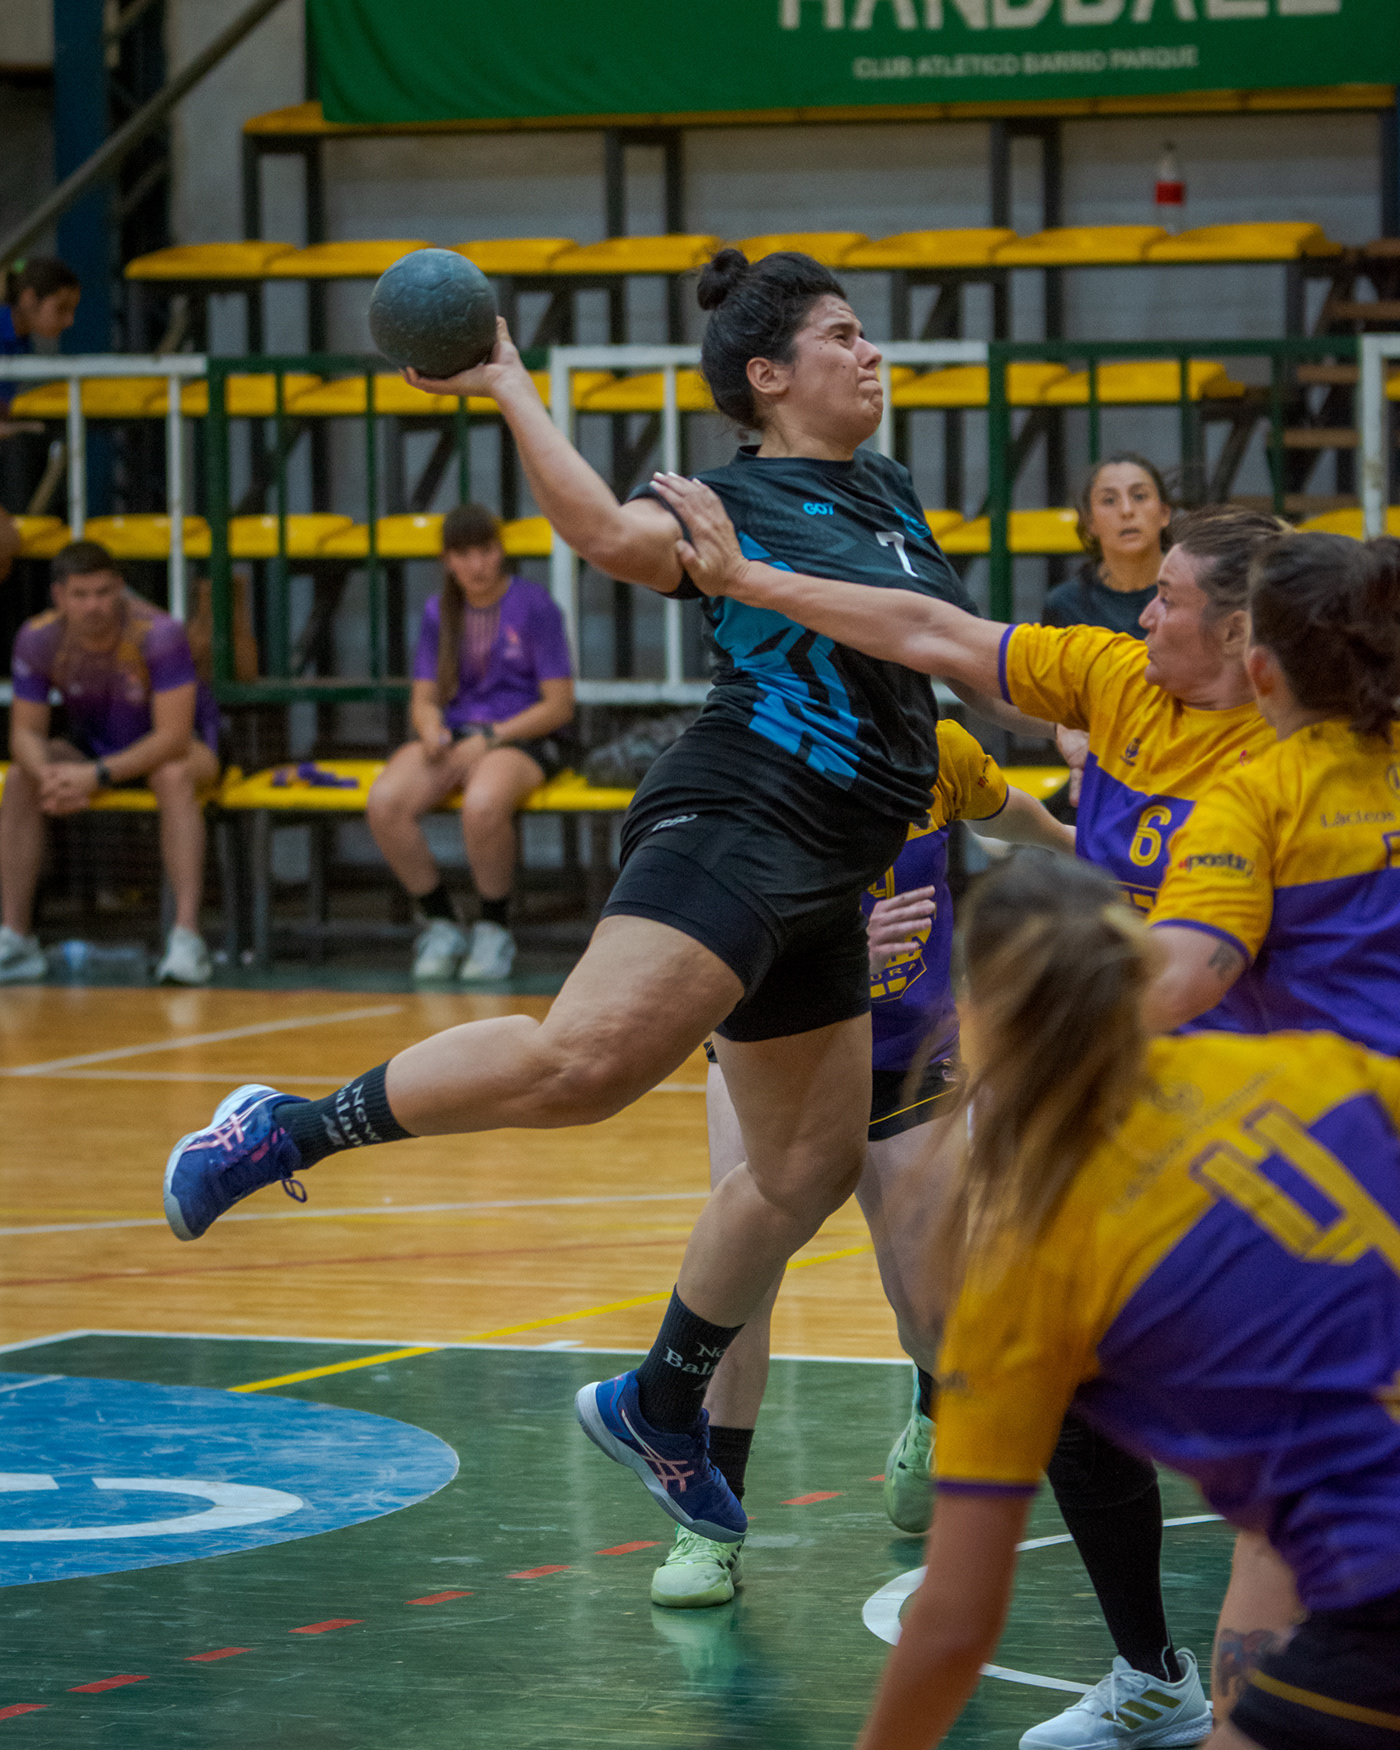 sport handball sports photography Fotografia Photography  deporte fotografiadeportiva